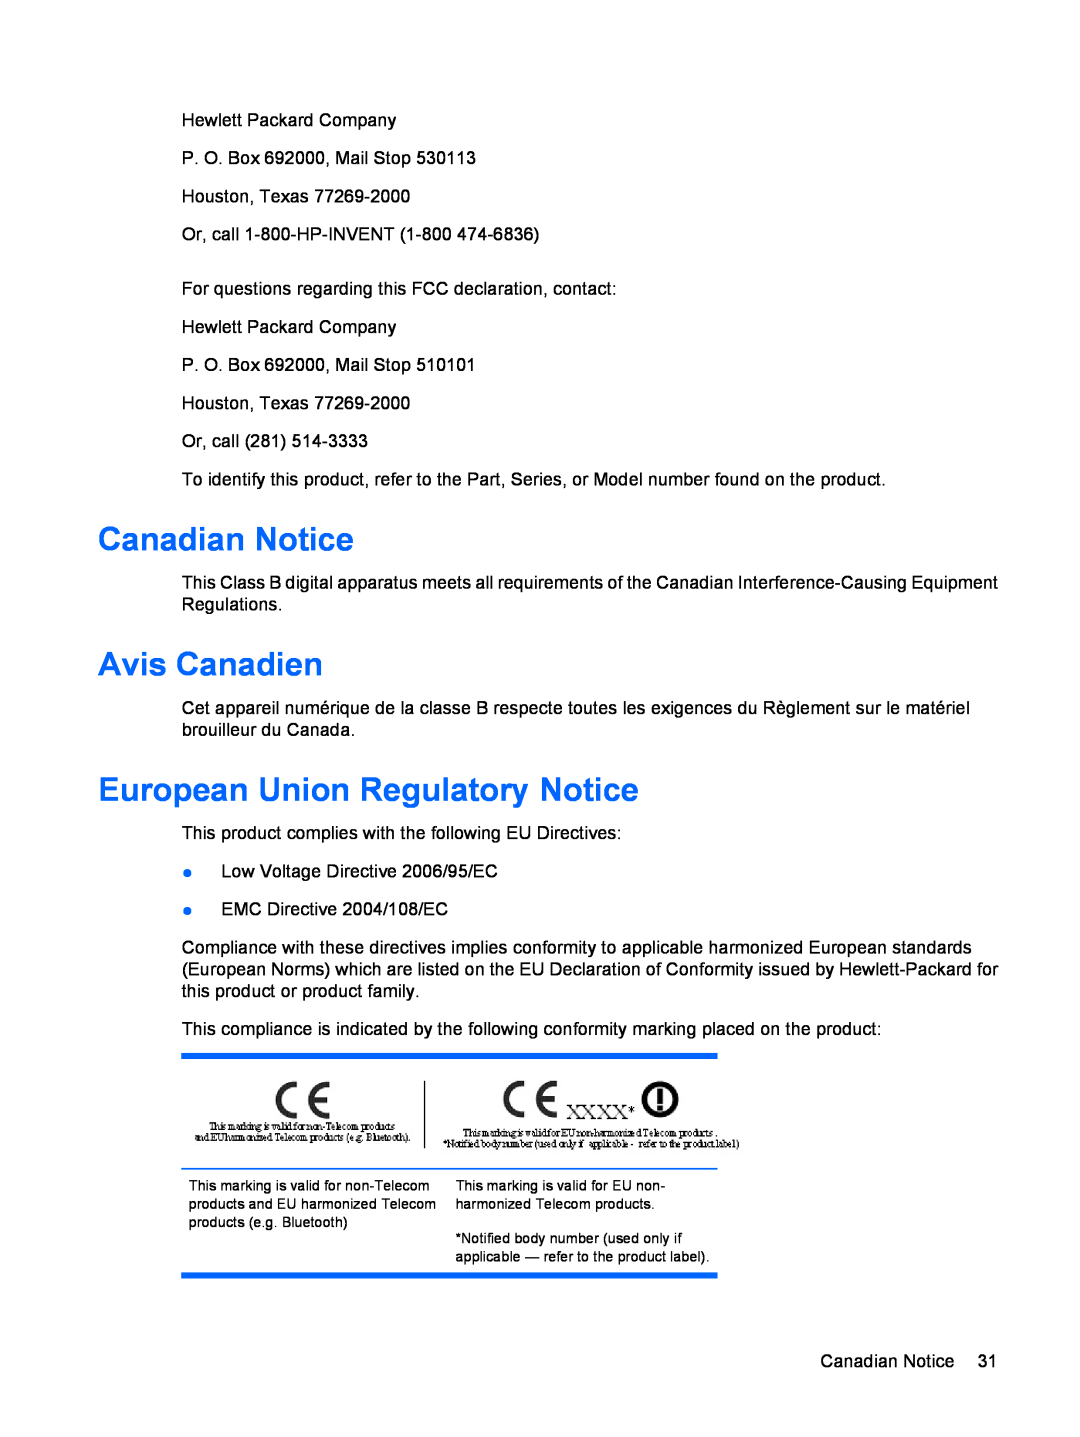 HP LE1711 17-inch manual Canadian Notice, Avis Canadien, European Union Regulatory Notice 